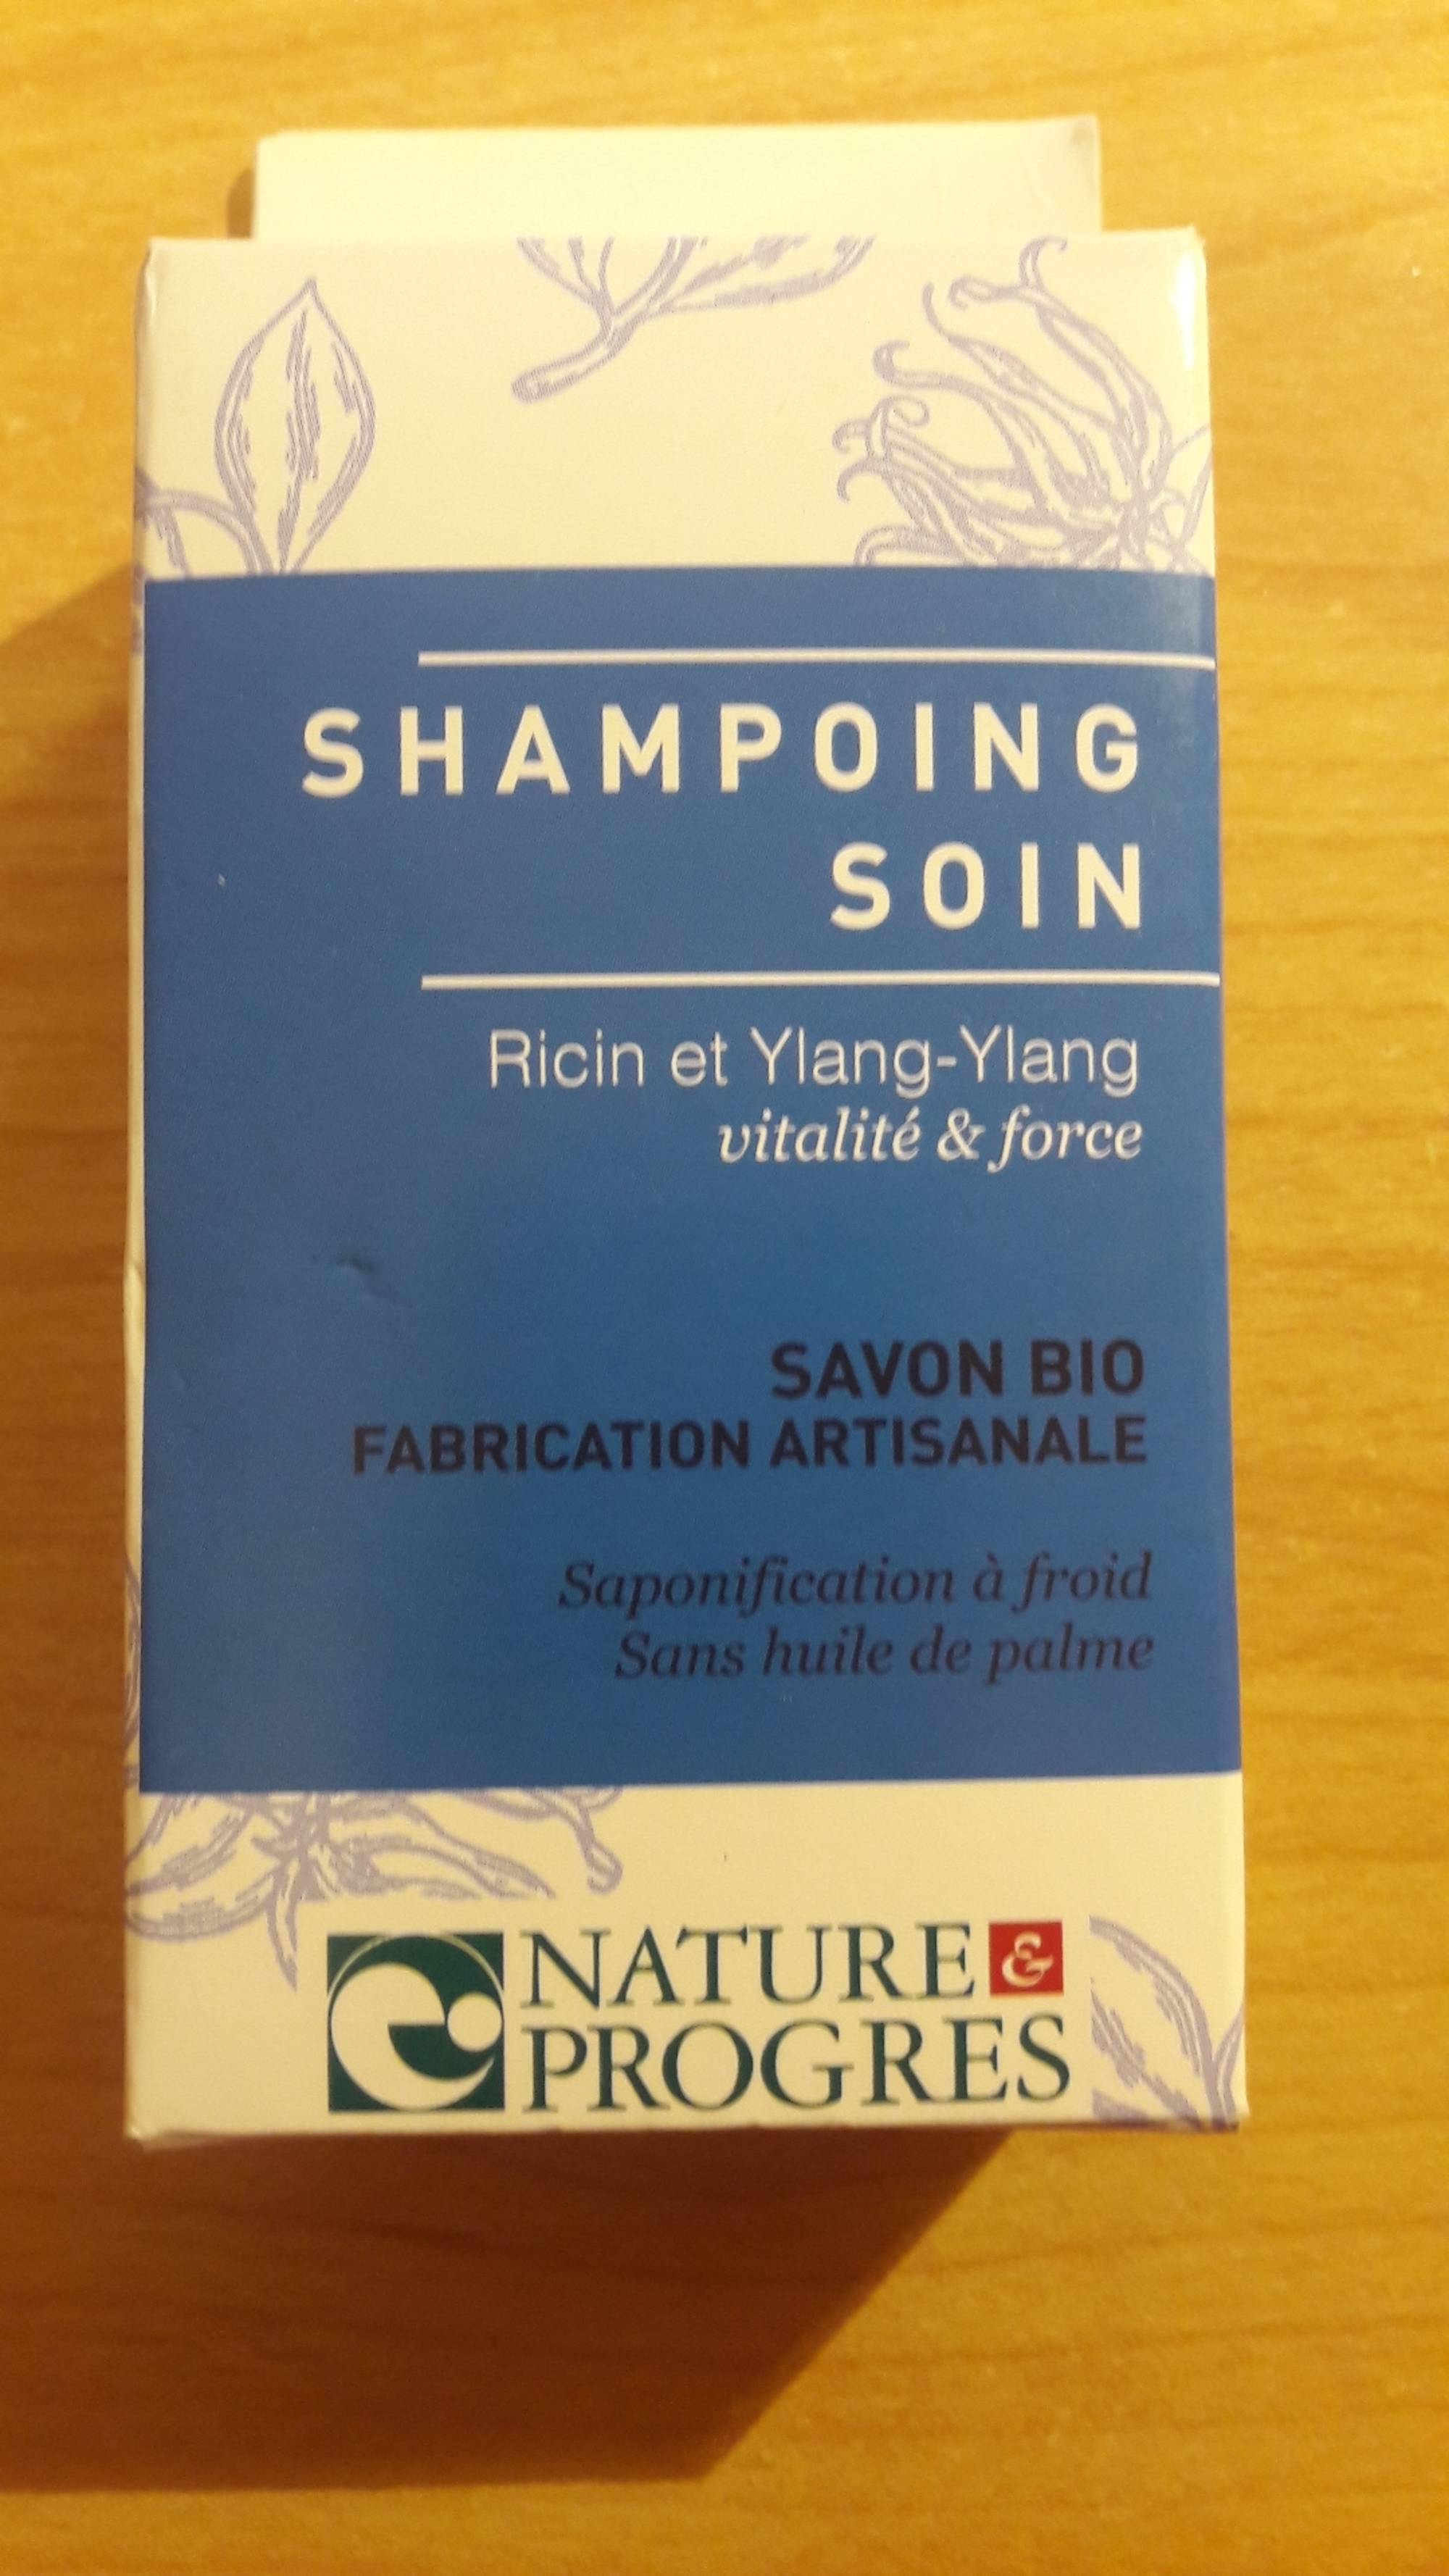 NATURE & PROGRÈS - Shampoing soin - Savon bio